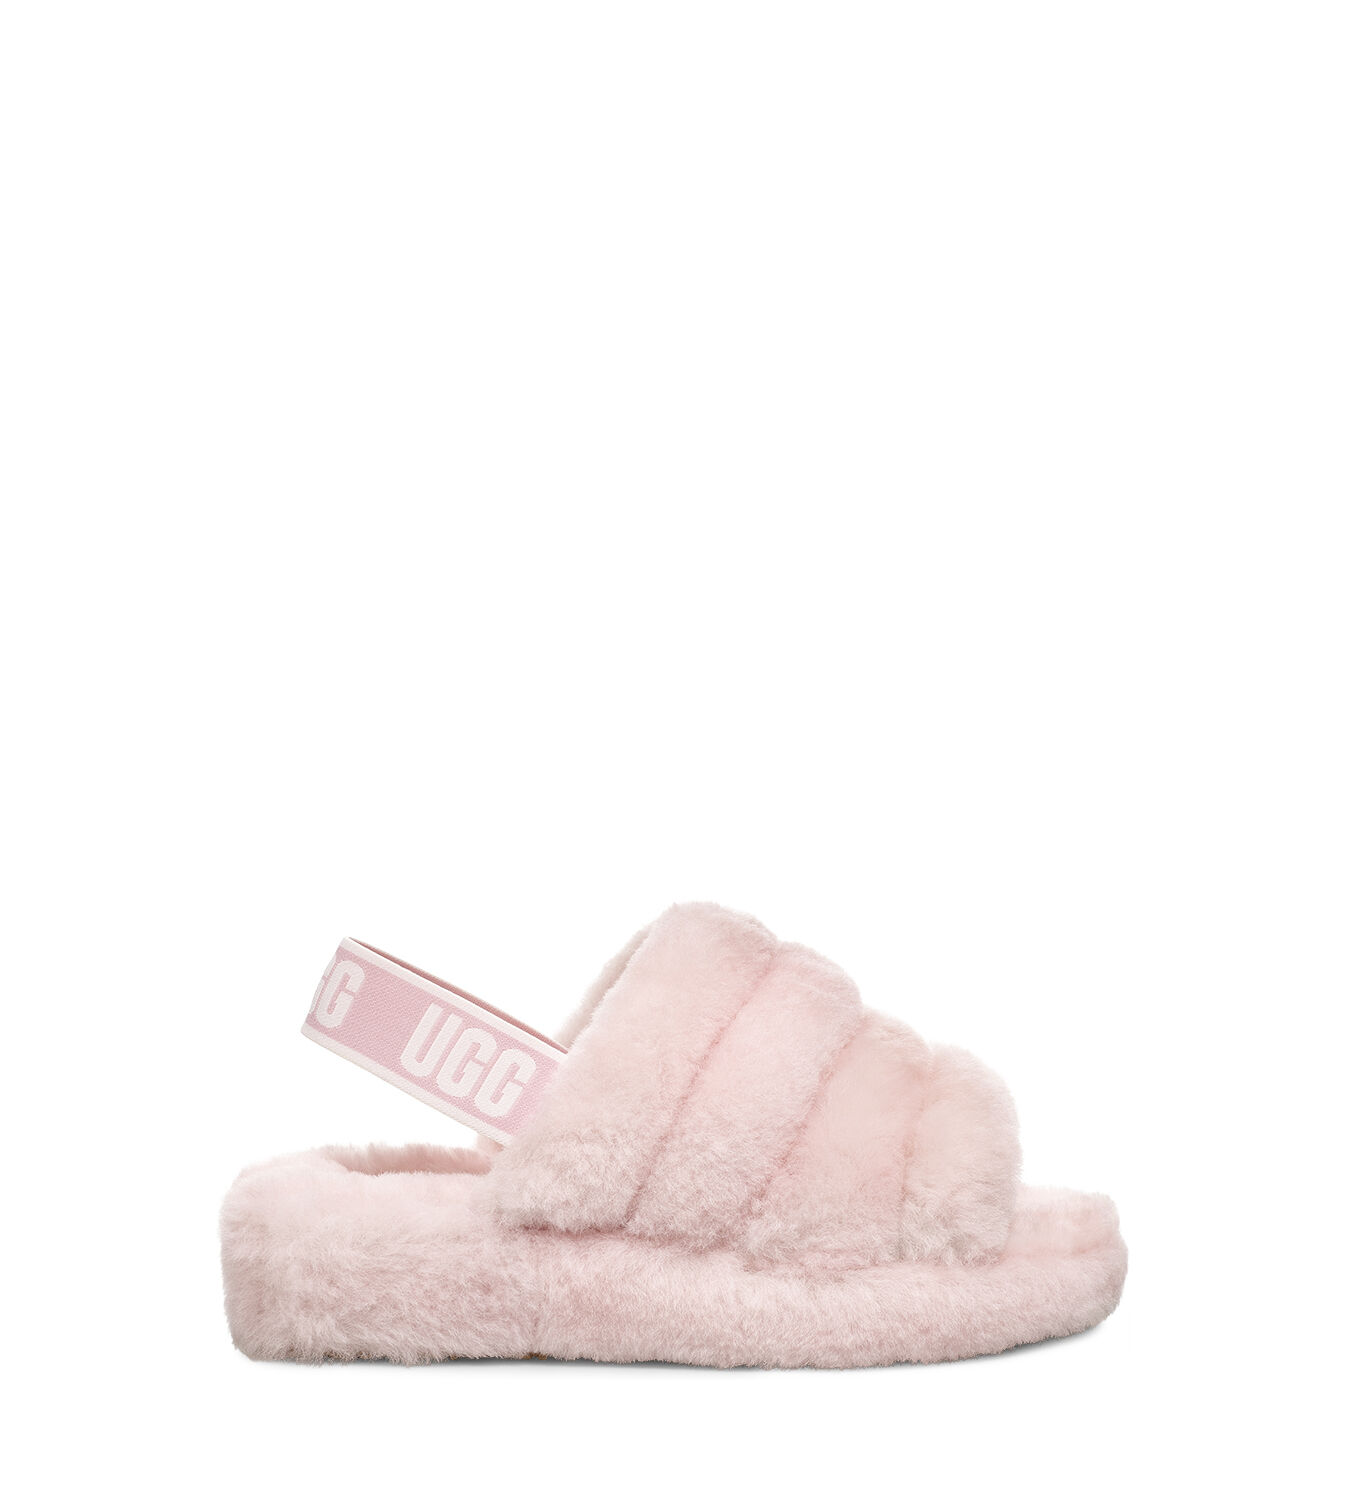 blush pink ugg slippers Cheaper Than 